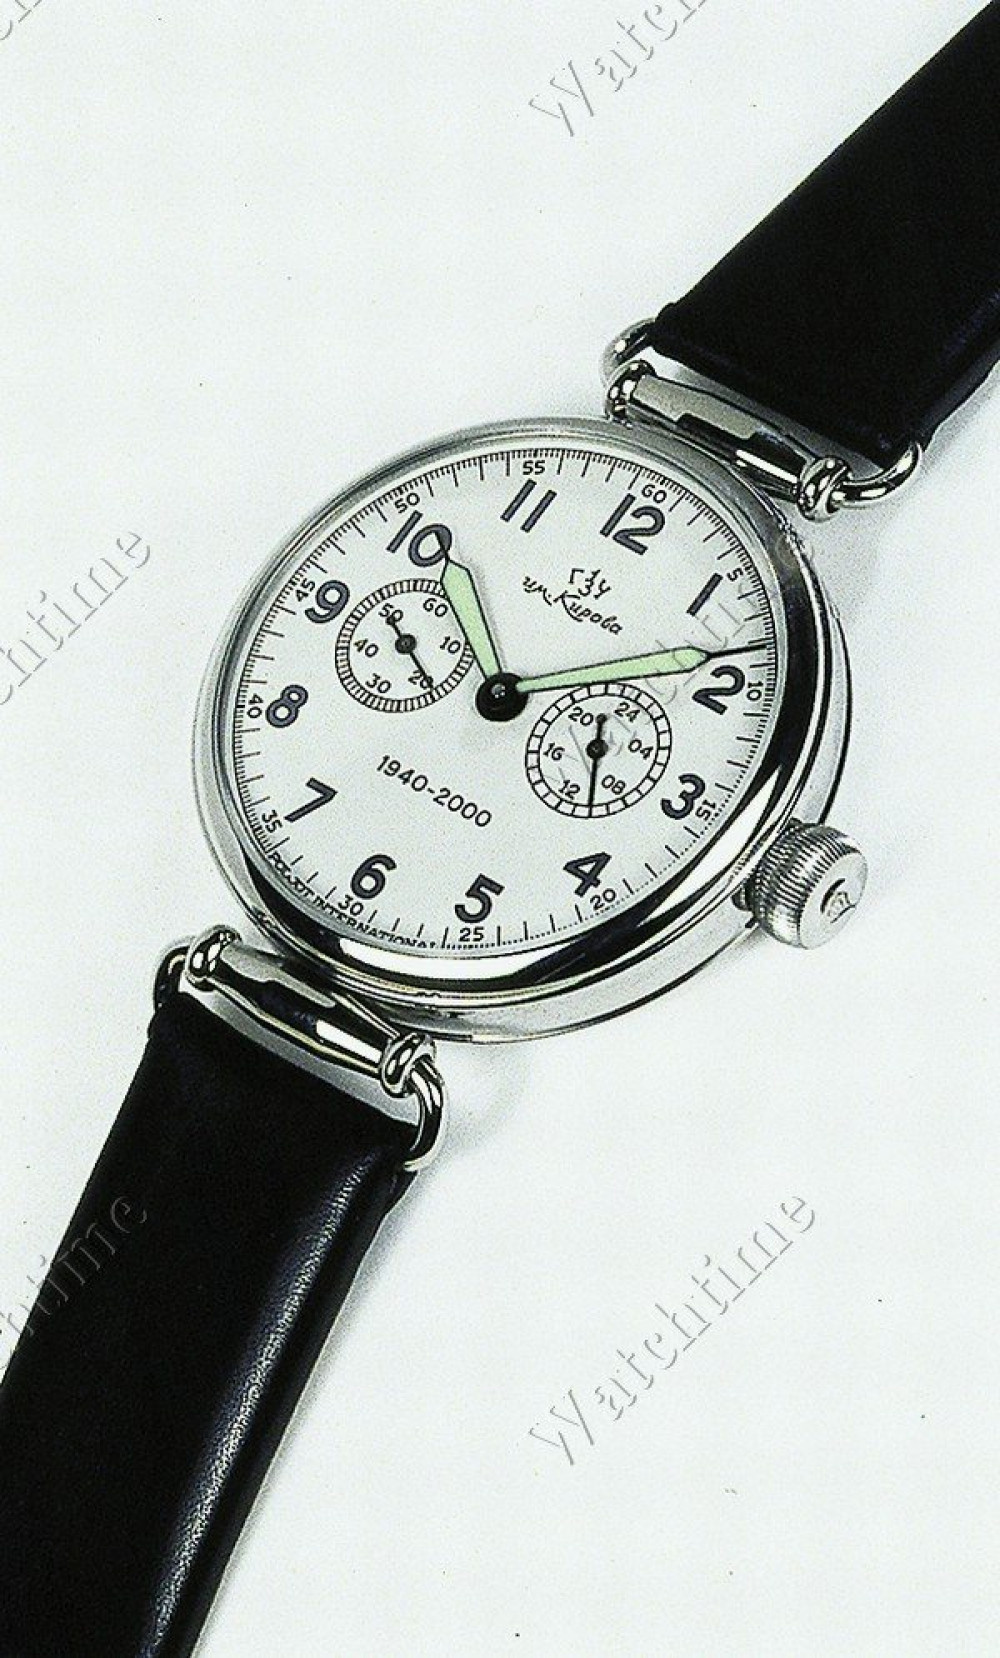 Zegarek firmy Poljot - International, model Kirovskie - 1st G.Ch.Z.